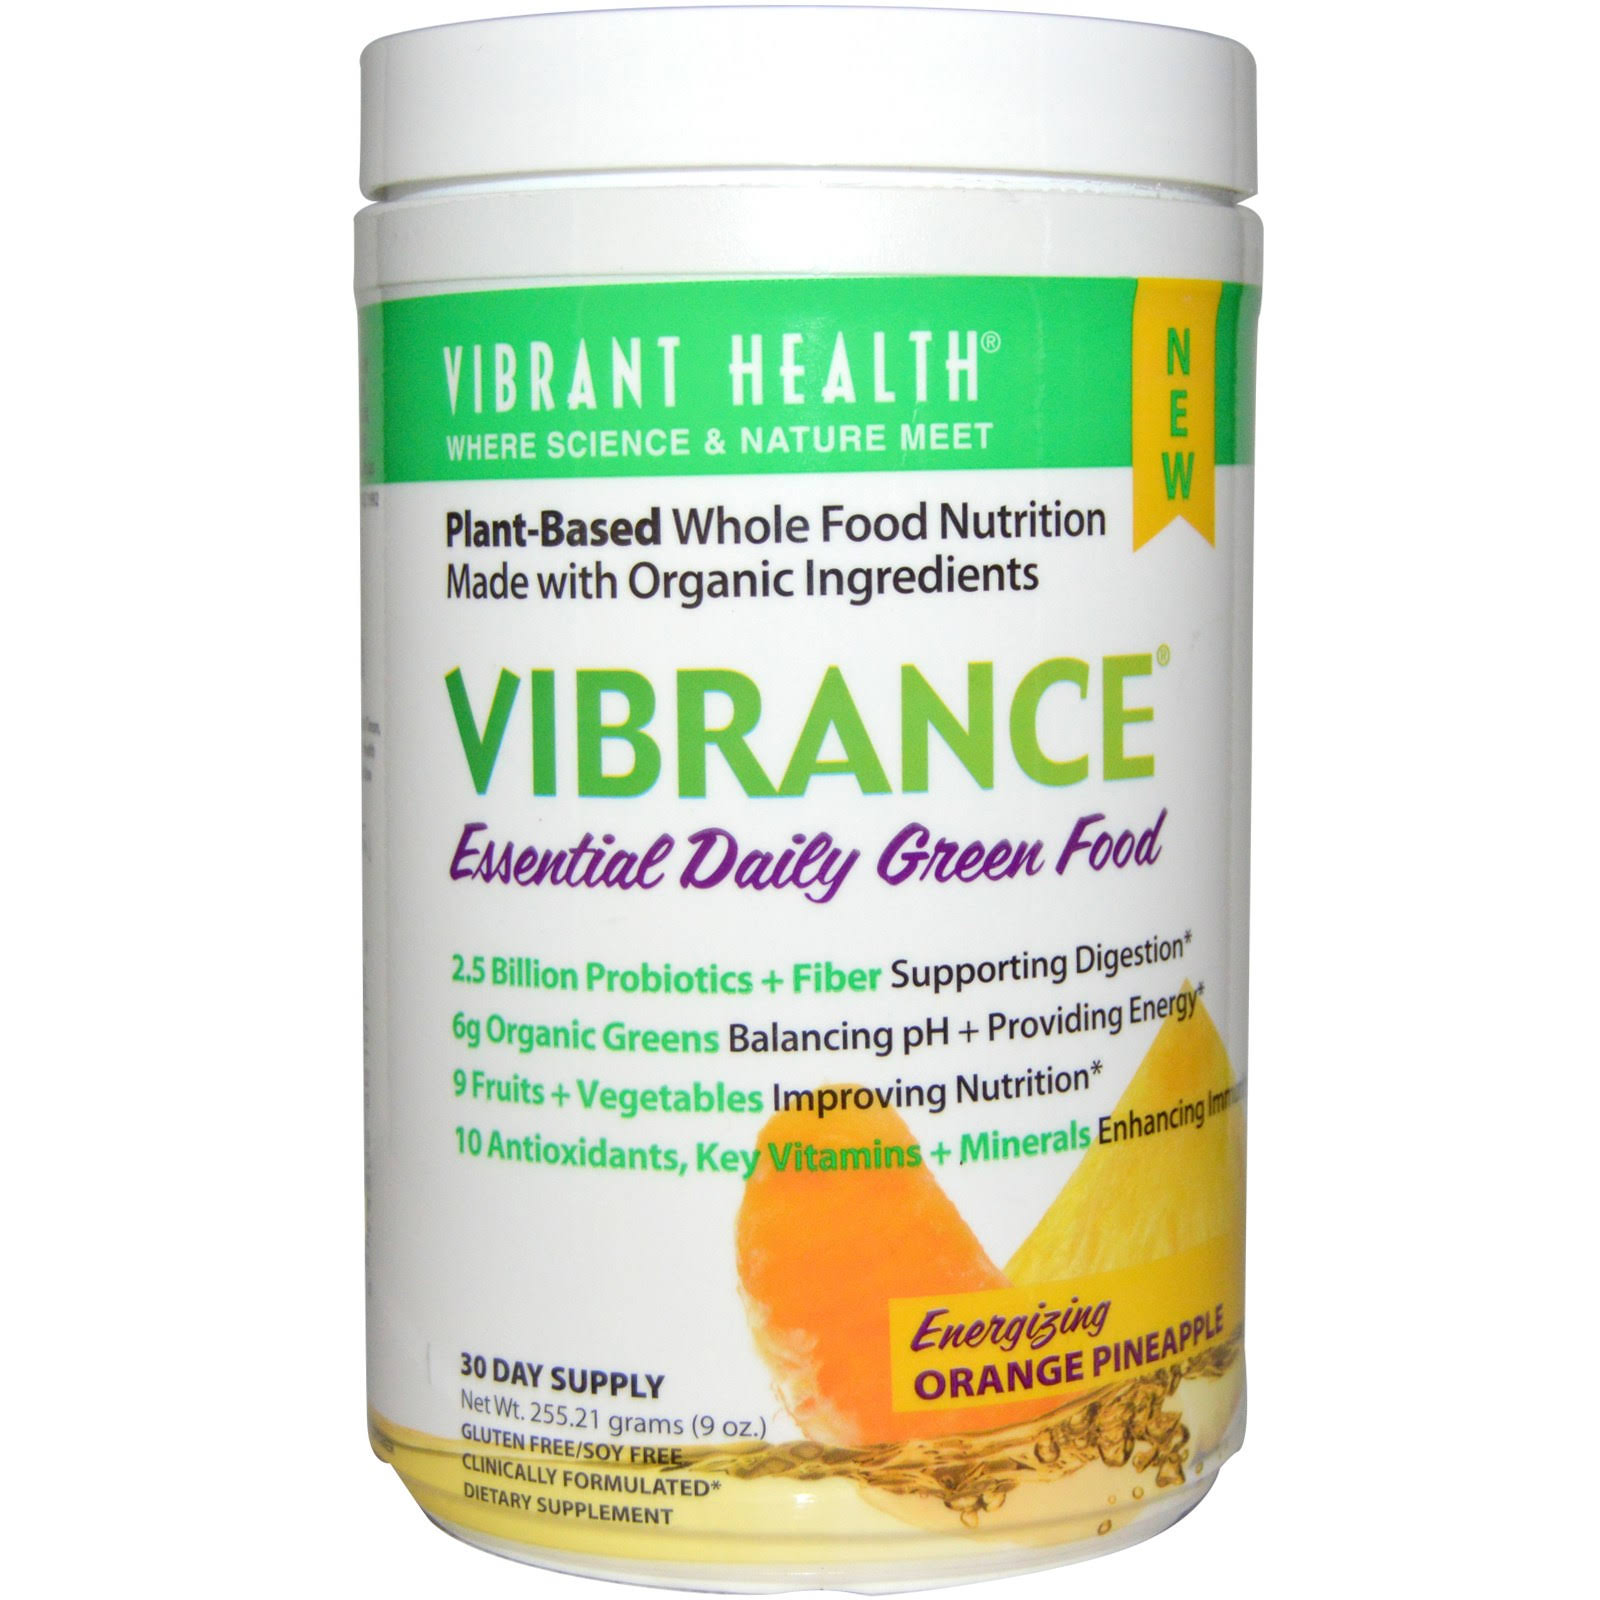 Vibrant Health Vibrance Essential Daily Green Food - Orange Pineapple, 9oz